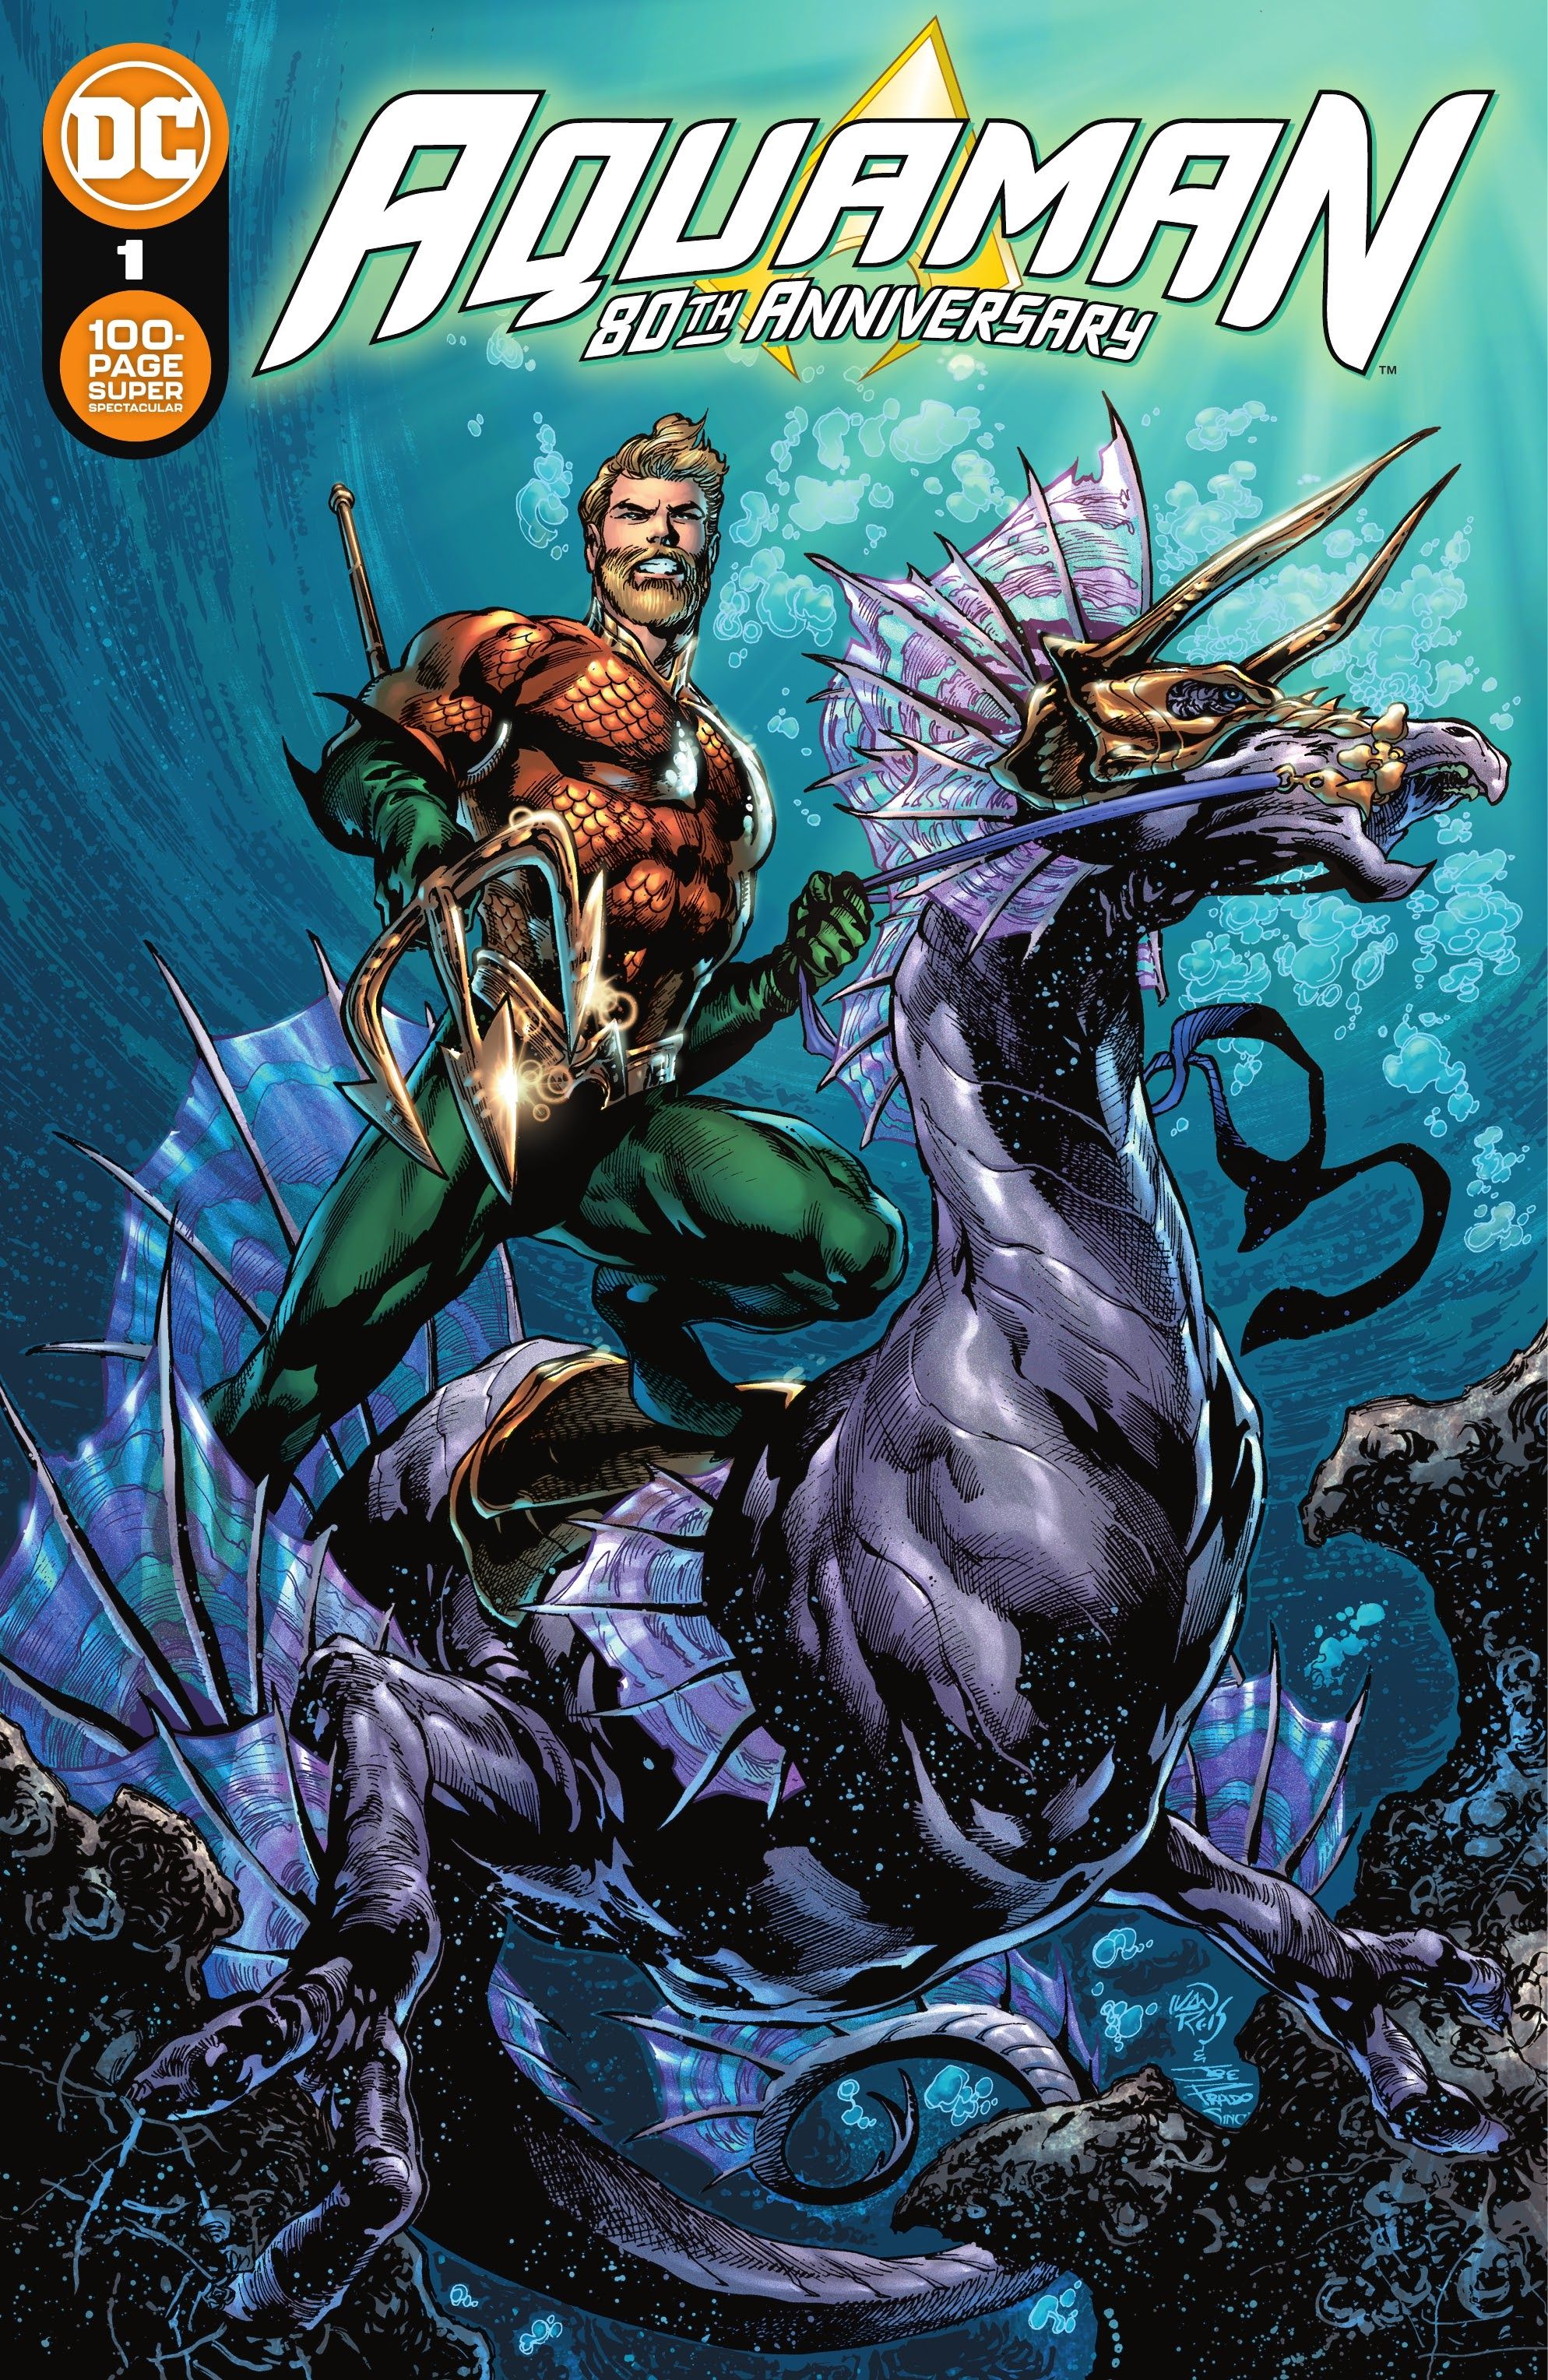 Aquaman rides a seahorse